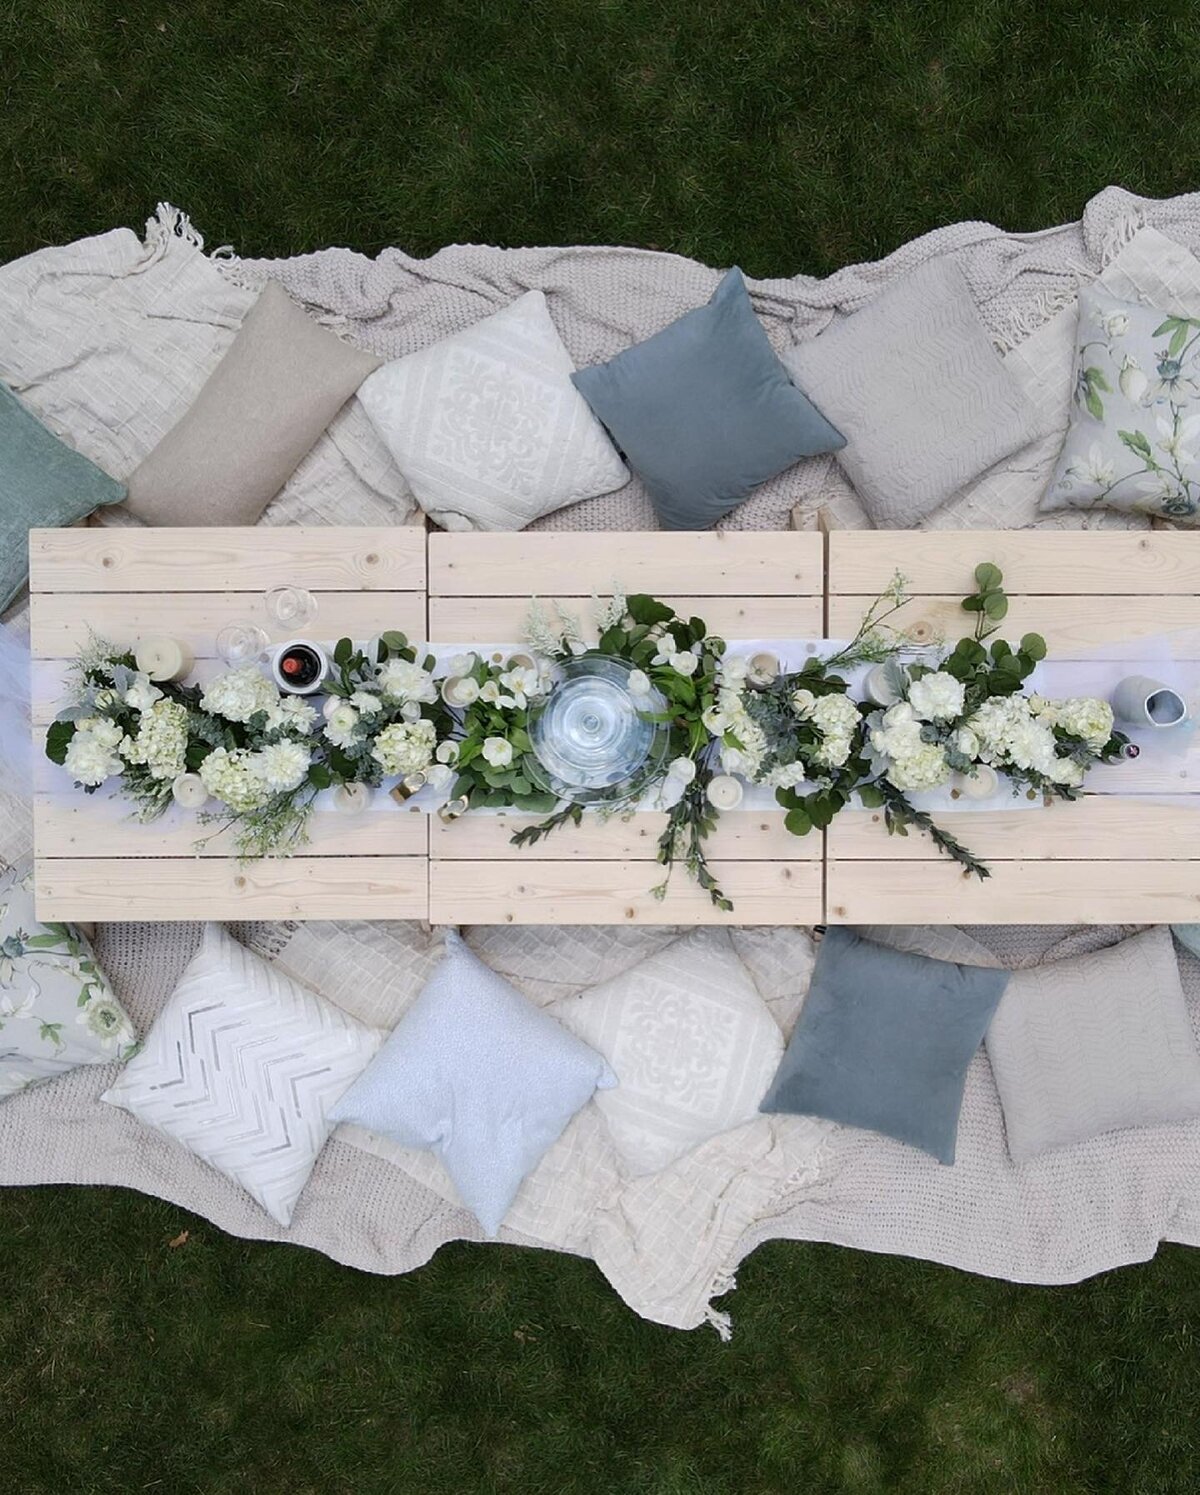 shot from above of white elegant luxury picnic set up outdoors